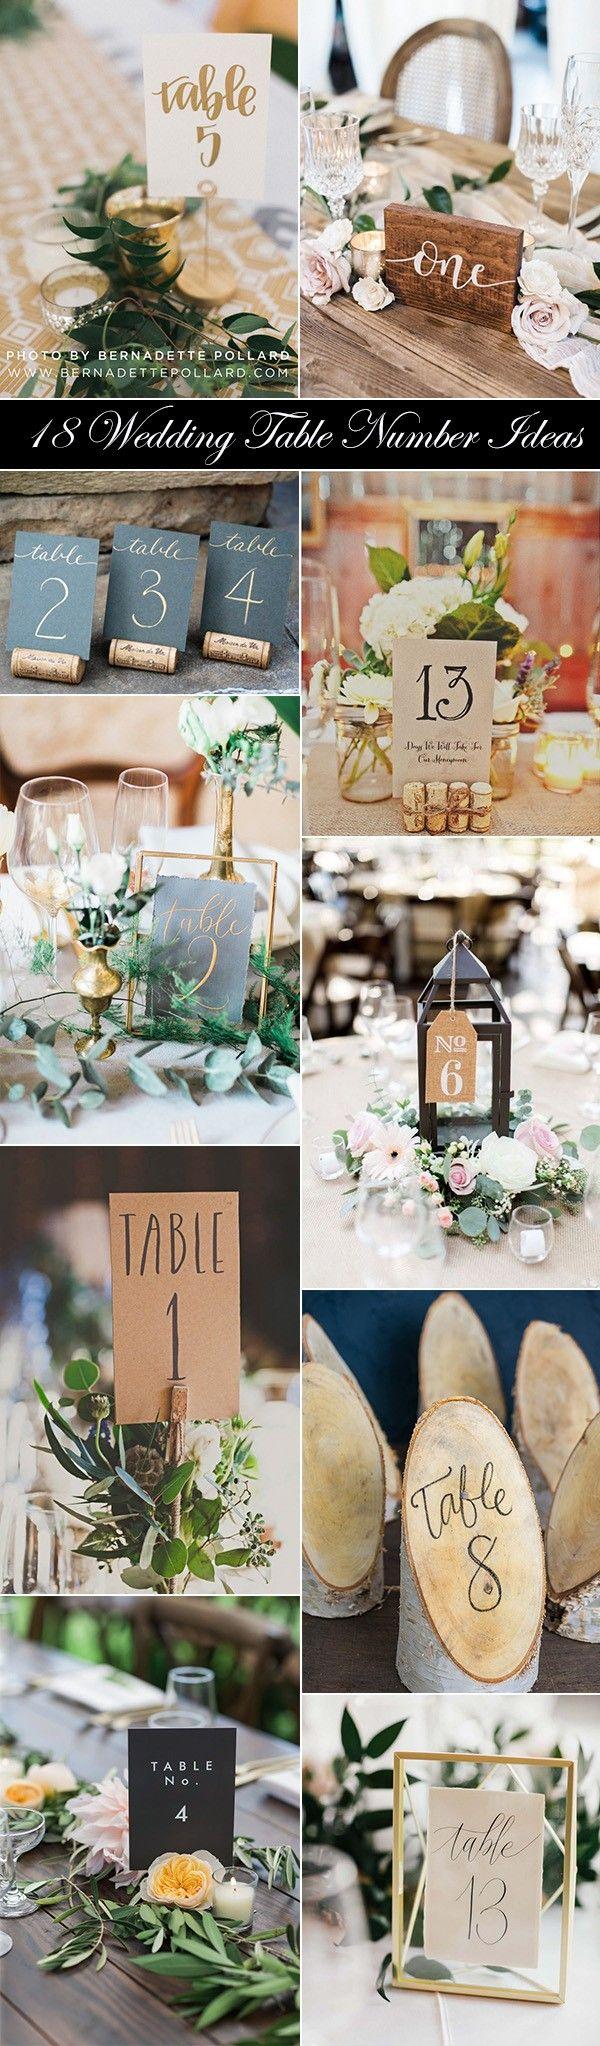 Wedding - 18 Inspiring Wedding Table Number Ideas To Love